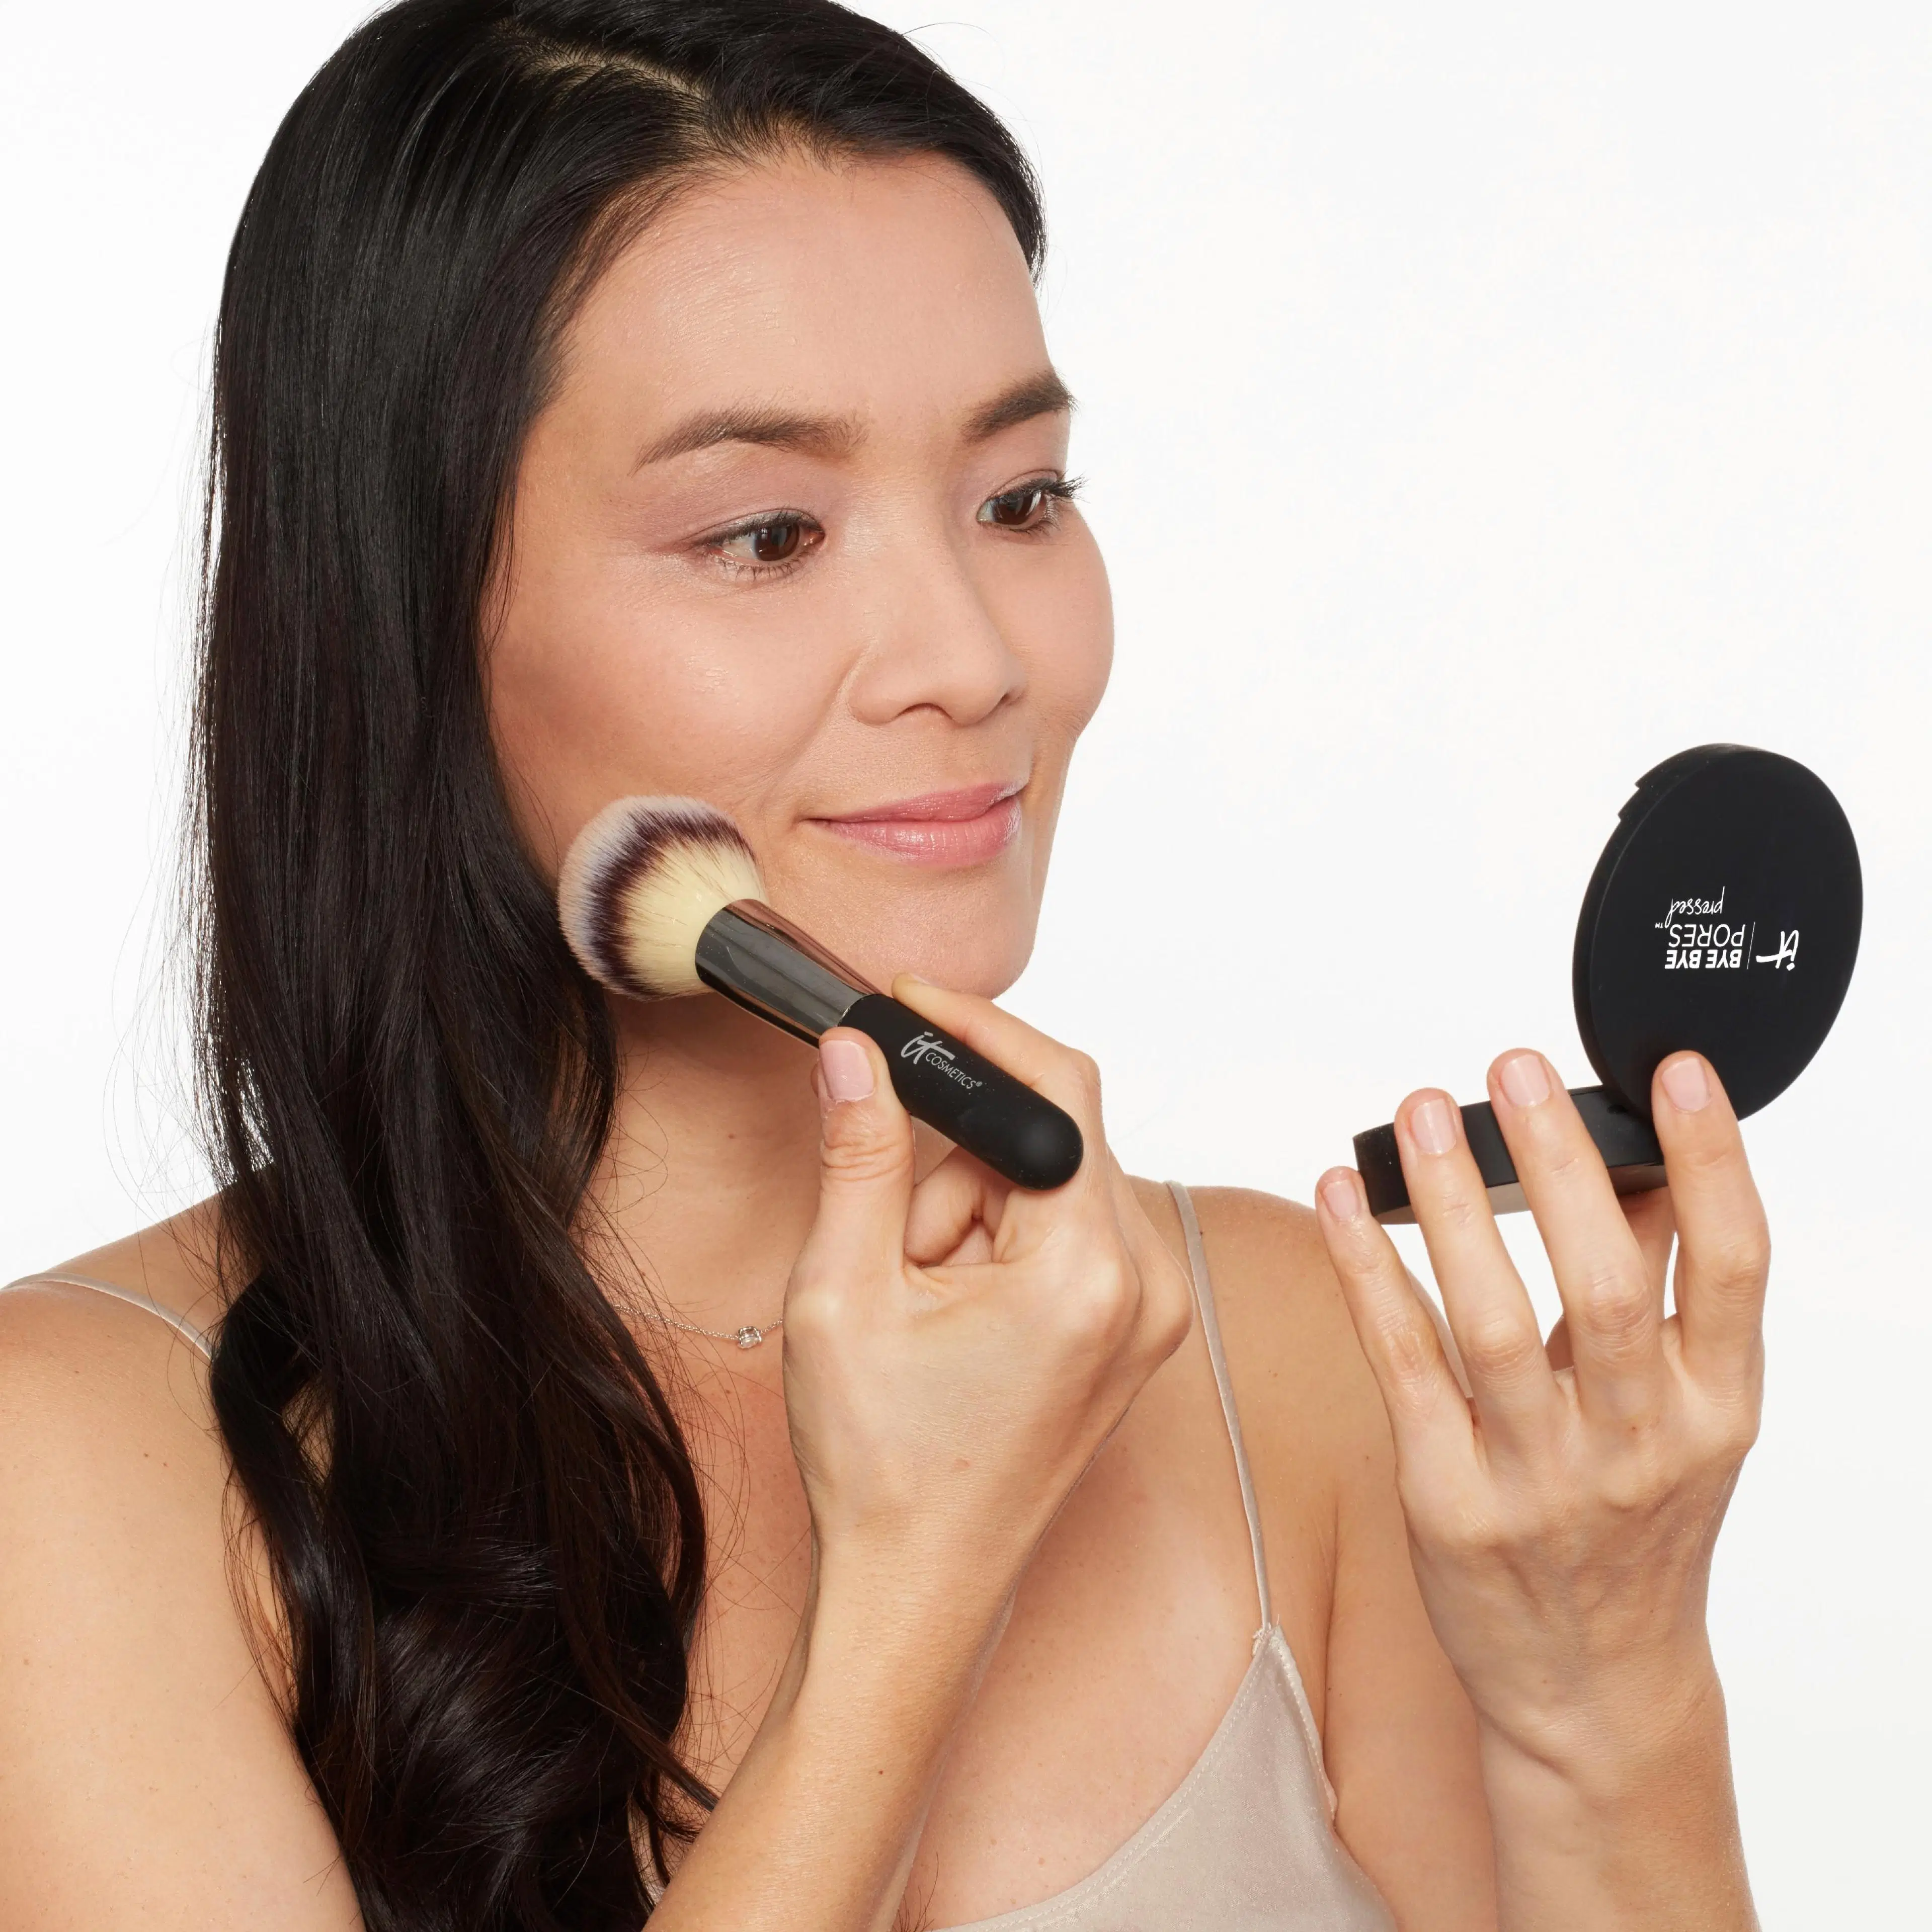 It Cosmetics Bye Bye Pores Pressed™ Translucent kivipuuteri 9 g